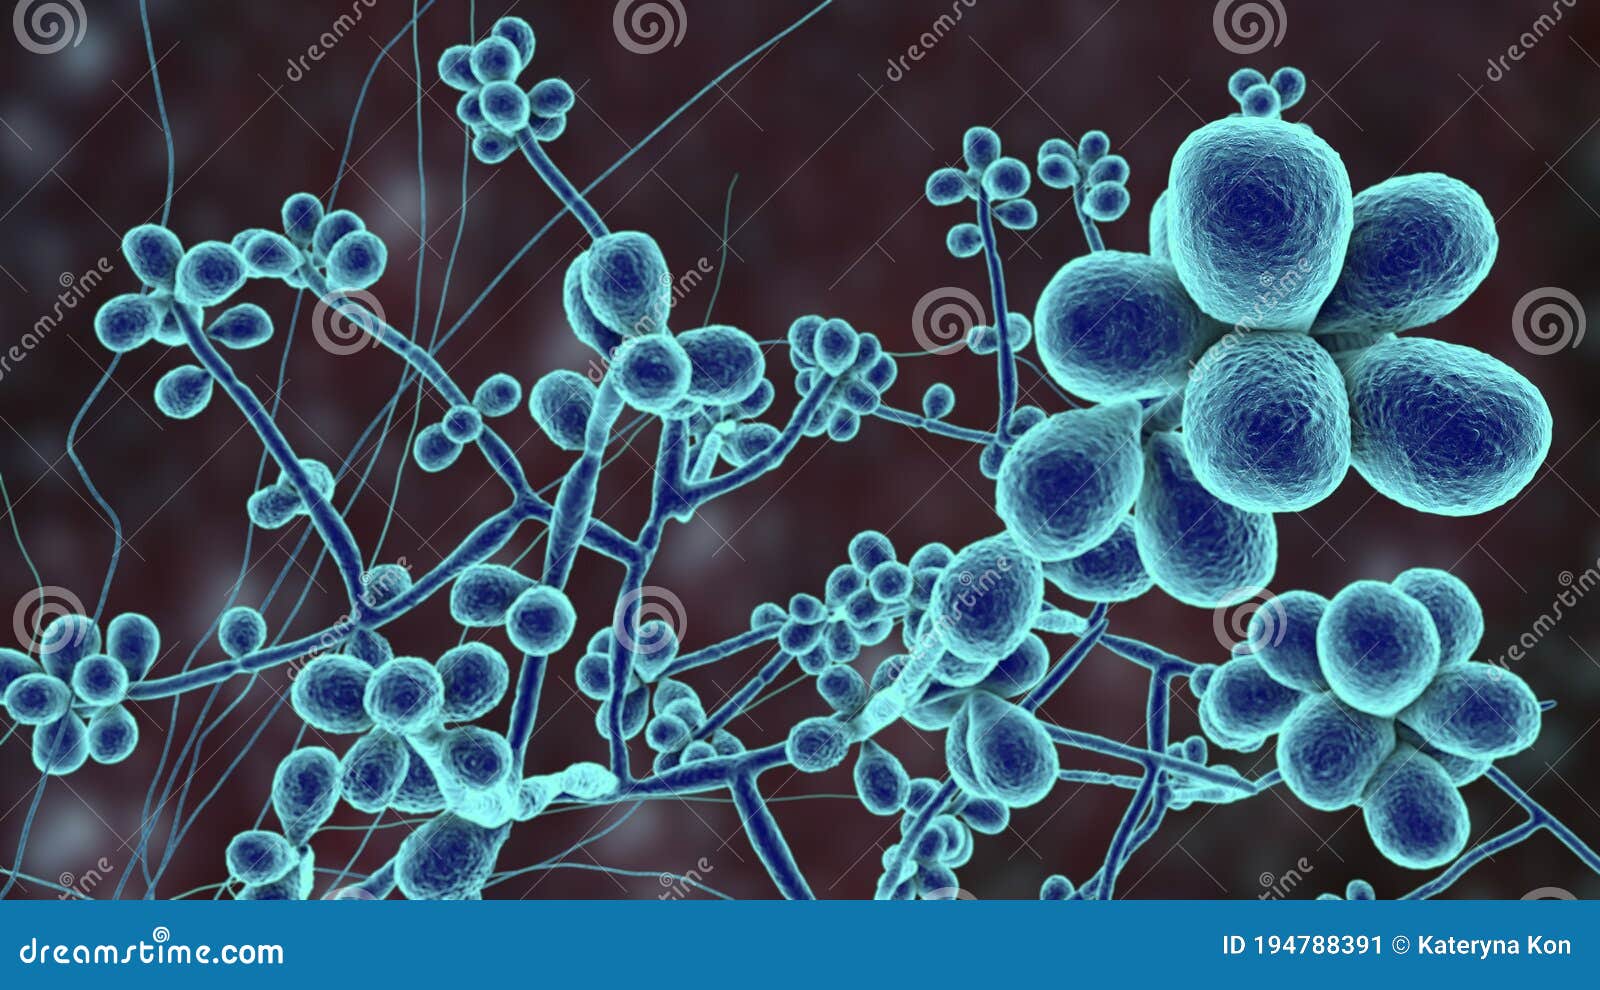 Fungal Hyphae Cells Vector Illustration | CartoonDealer.com #130640756